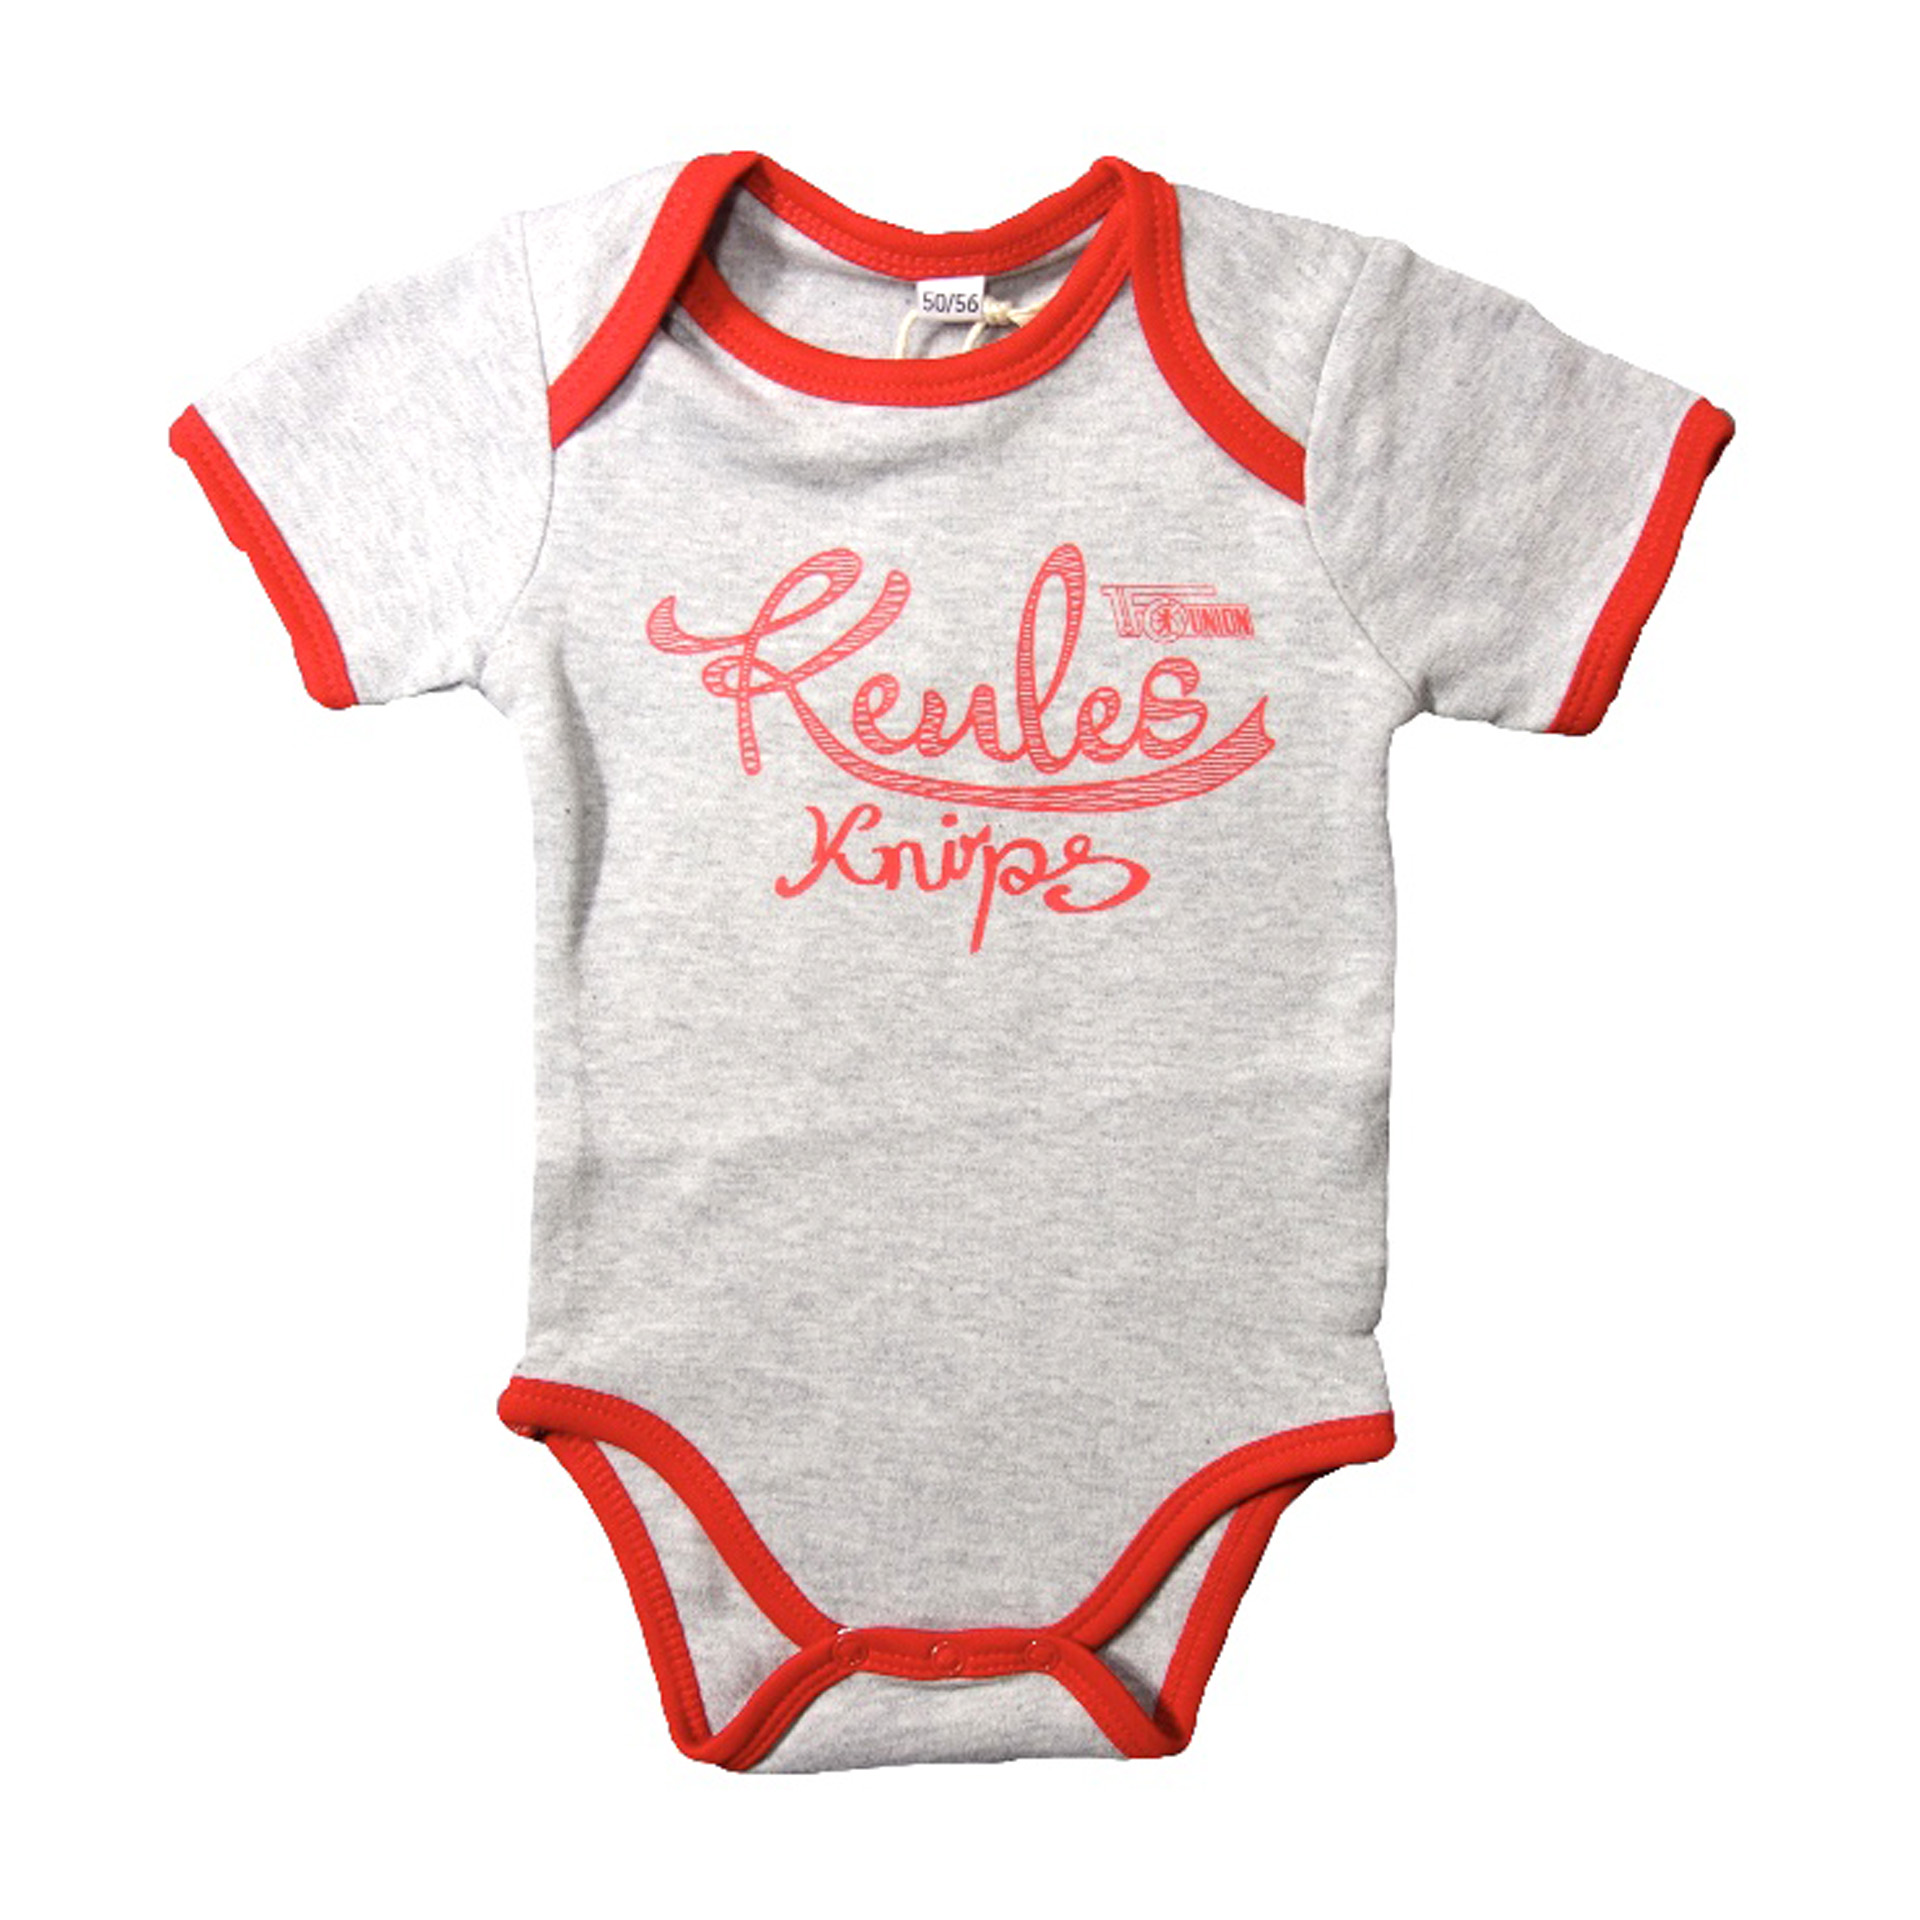 Union Baby Kurzarmbody "Keules Knirps" Baby Body